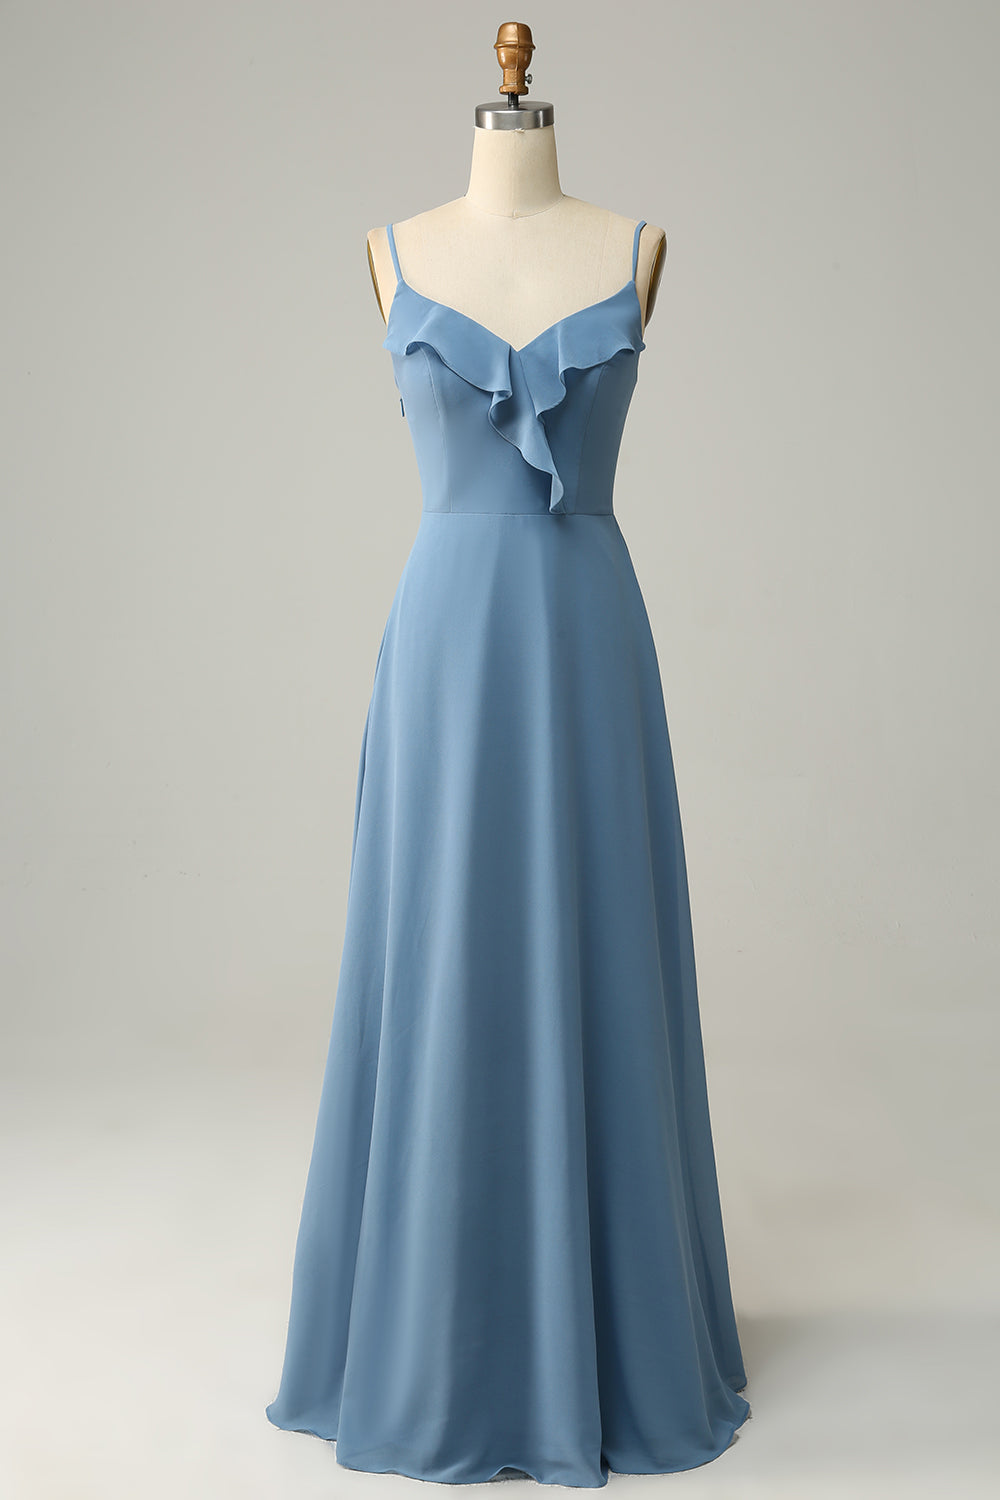 Strap Dusty Blue Ruffle A-Line Bridesmaid Dress